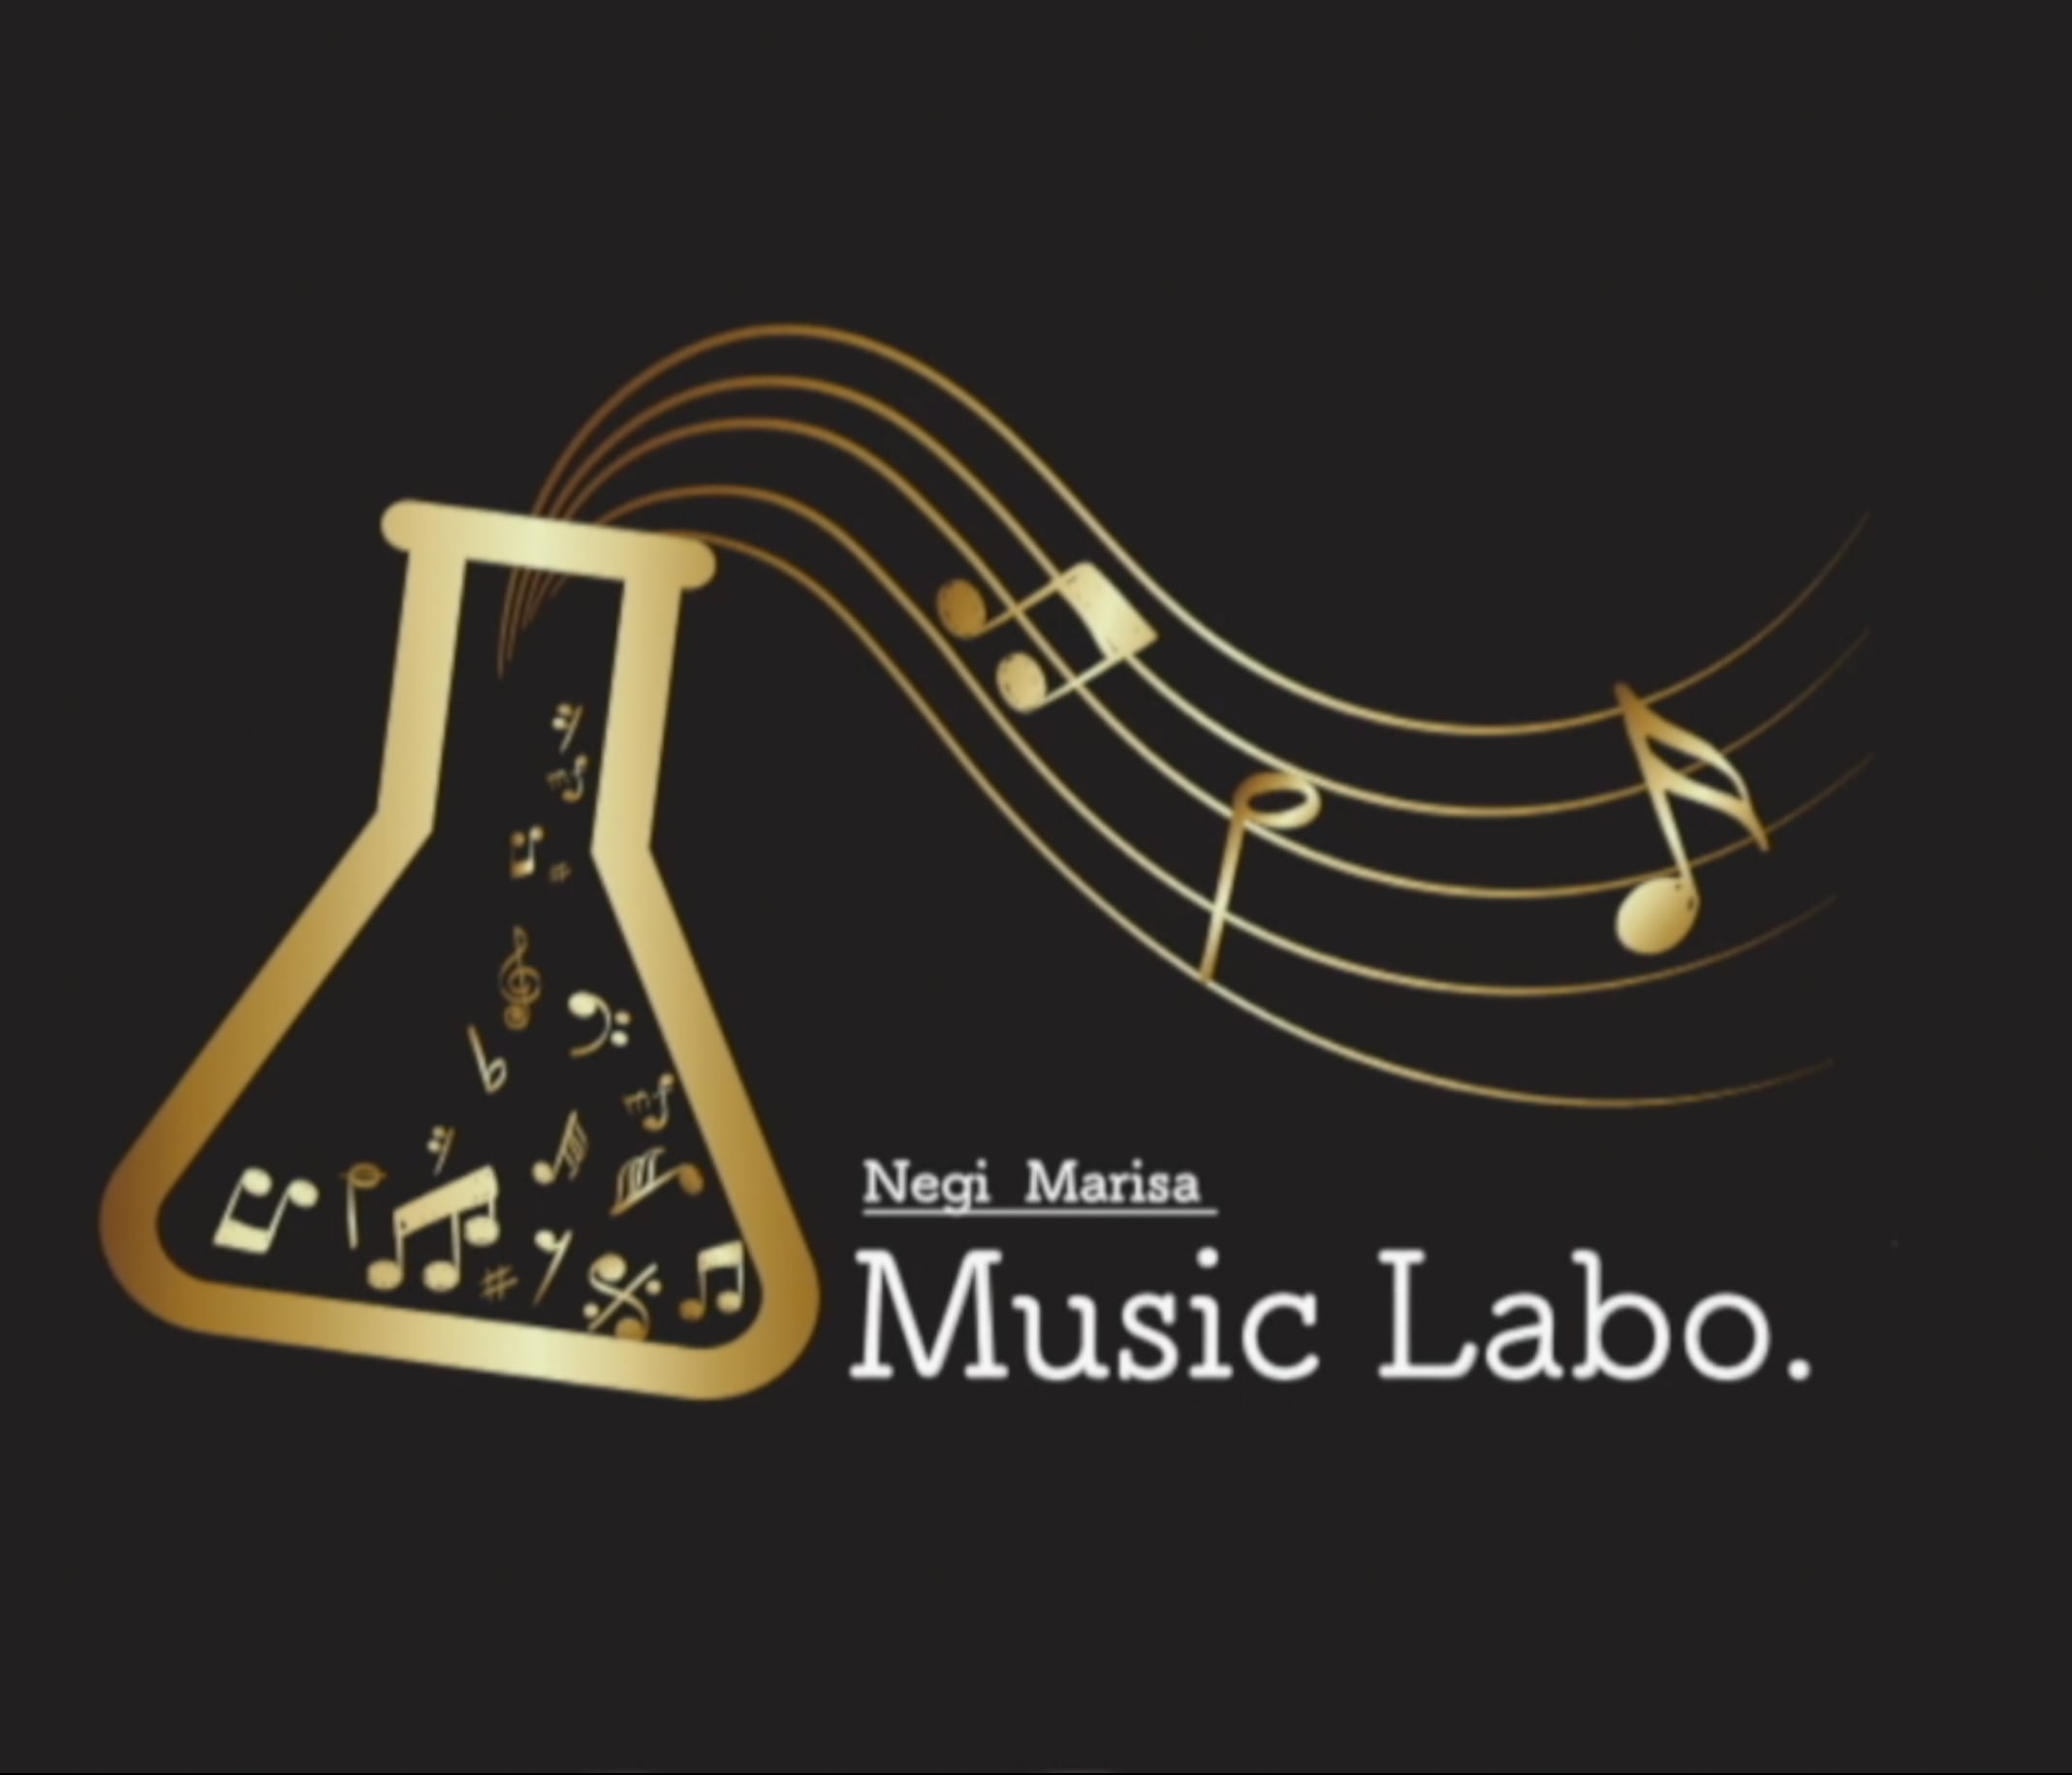 Music Labo